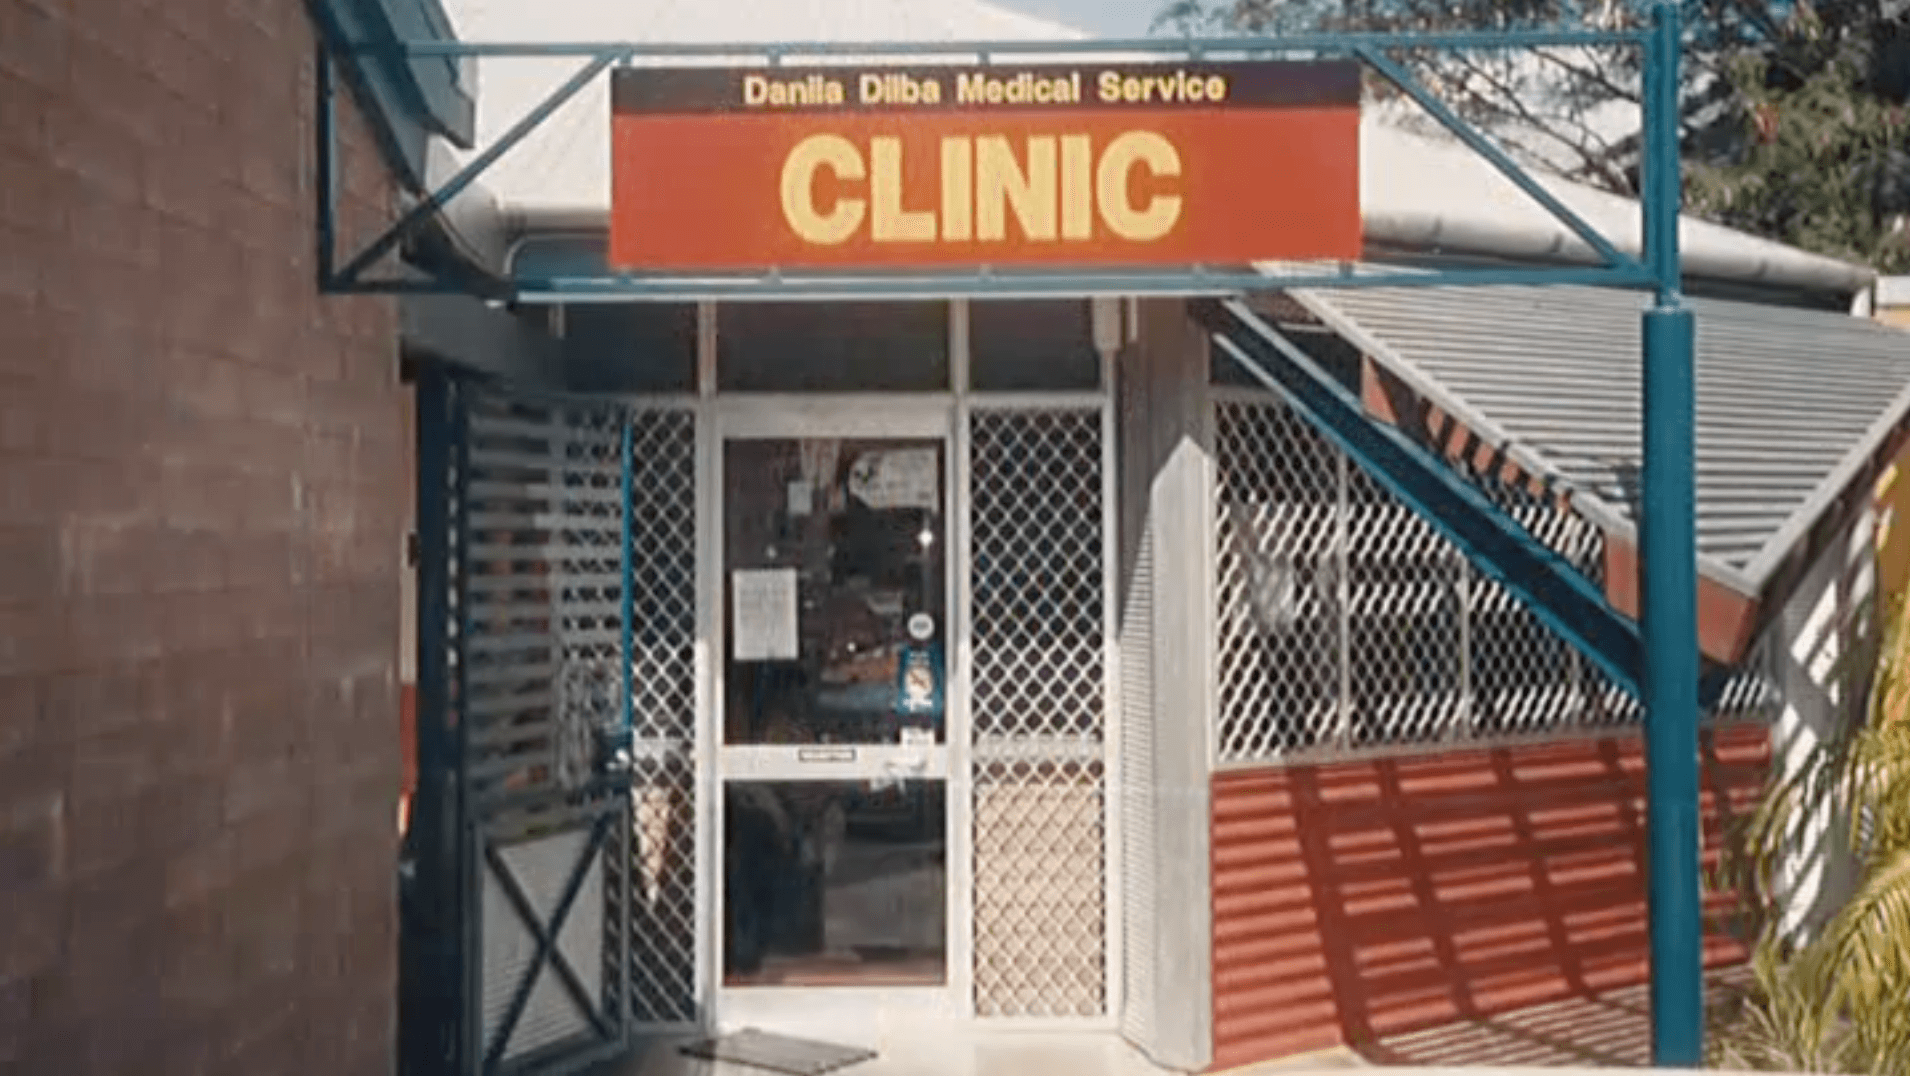 Old Danila Dilba Clinic